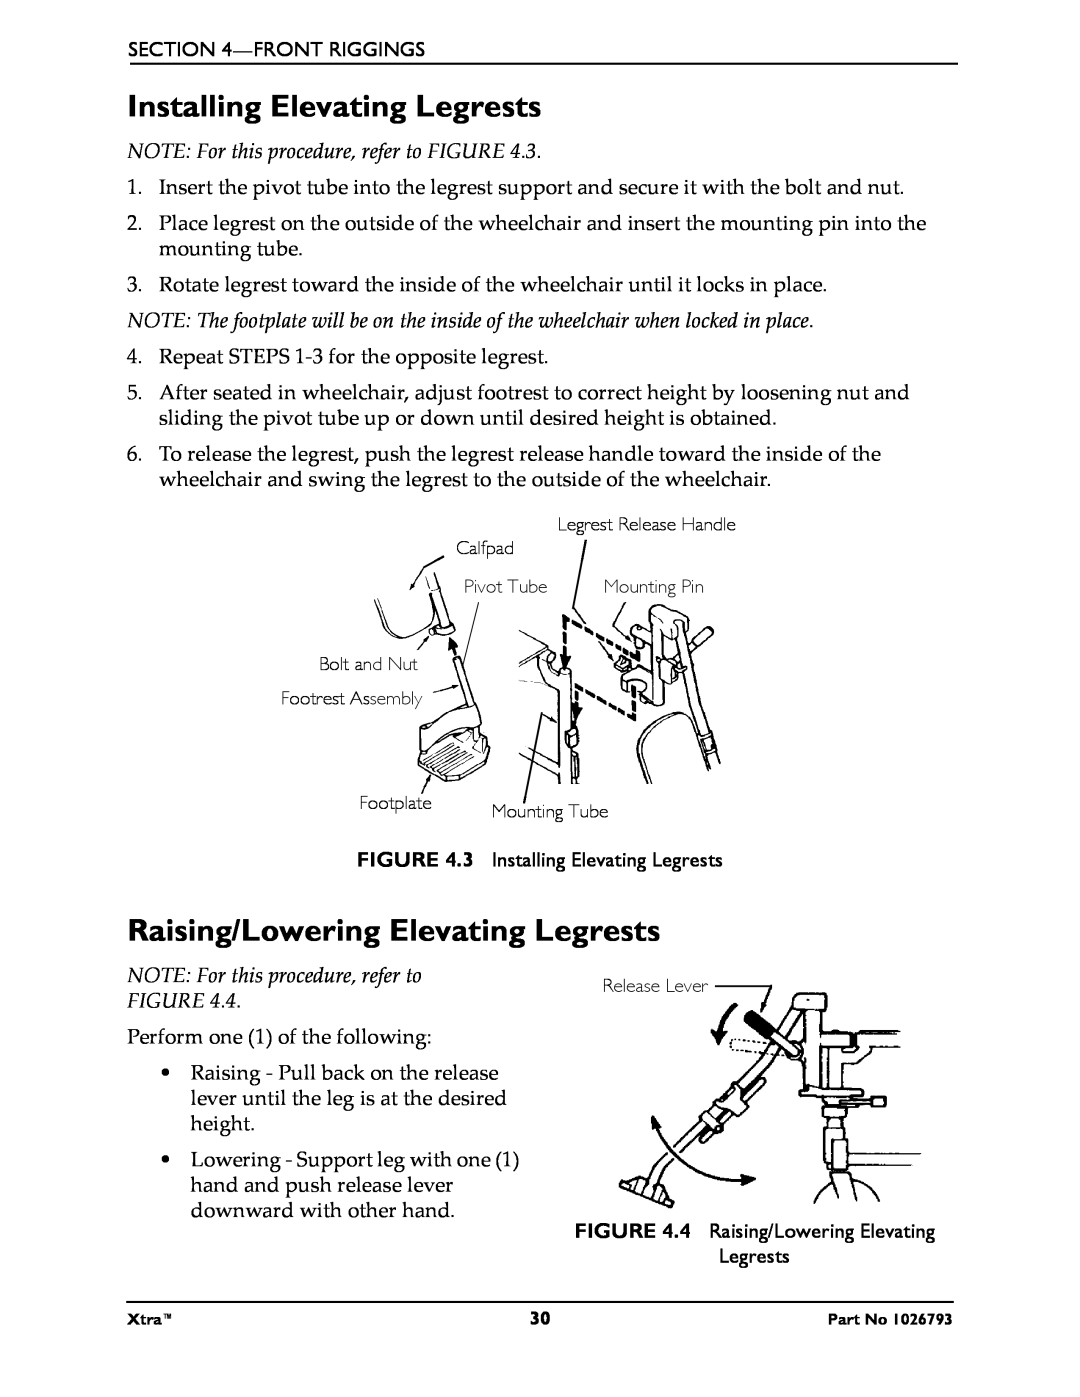 Invacare 1026793 manual Installing Elevating Legrests, Raising/Lowering Elevating Legrests 